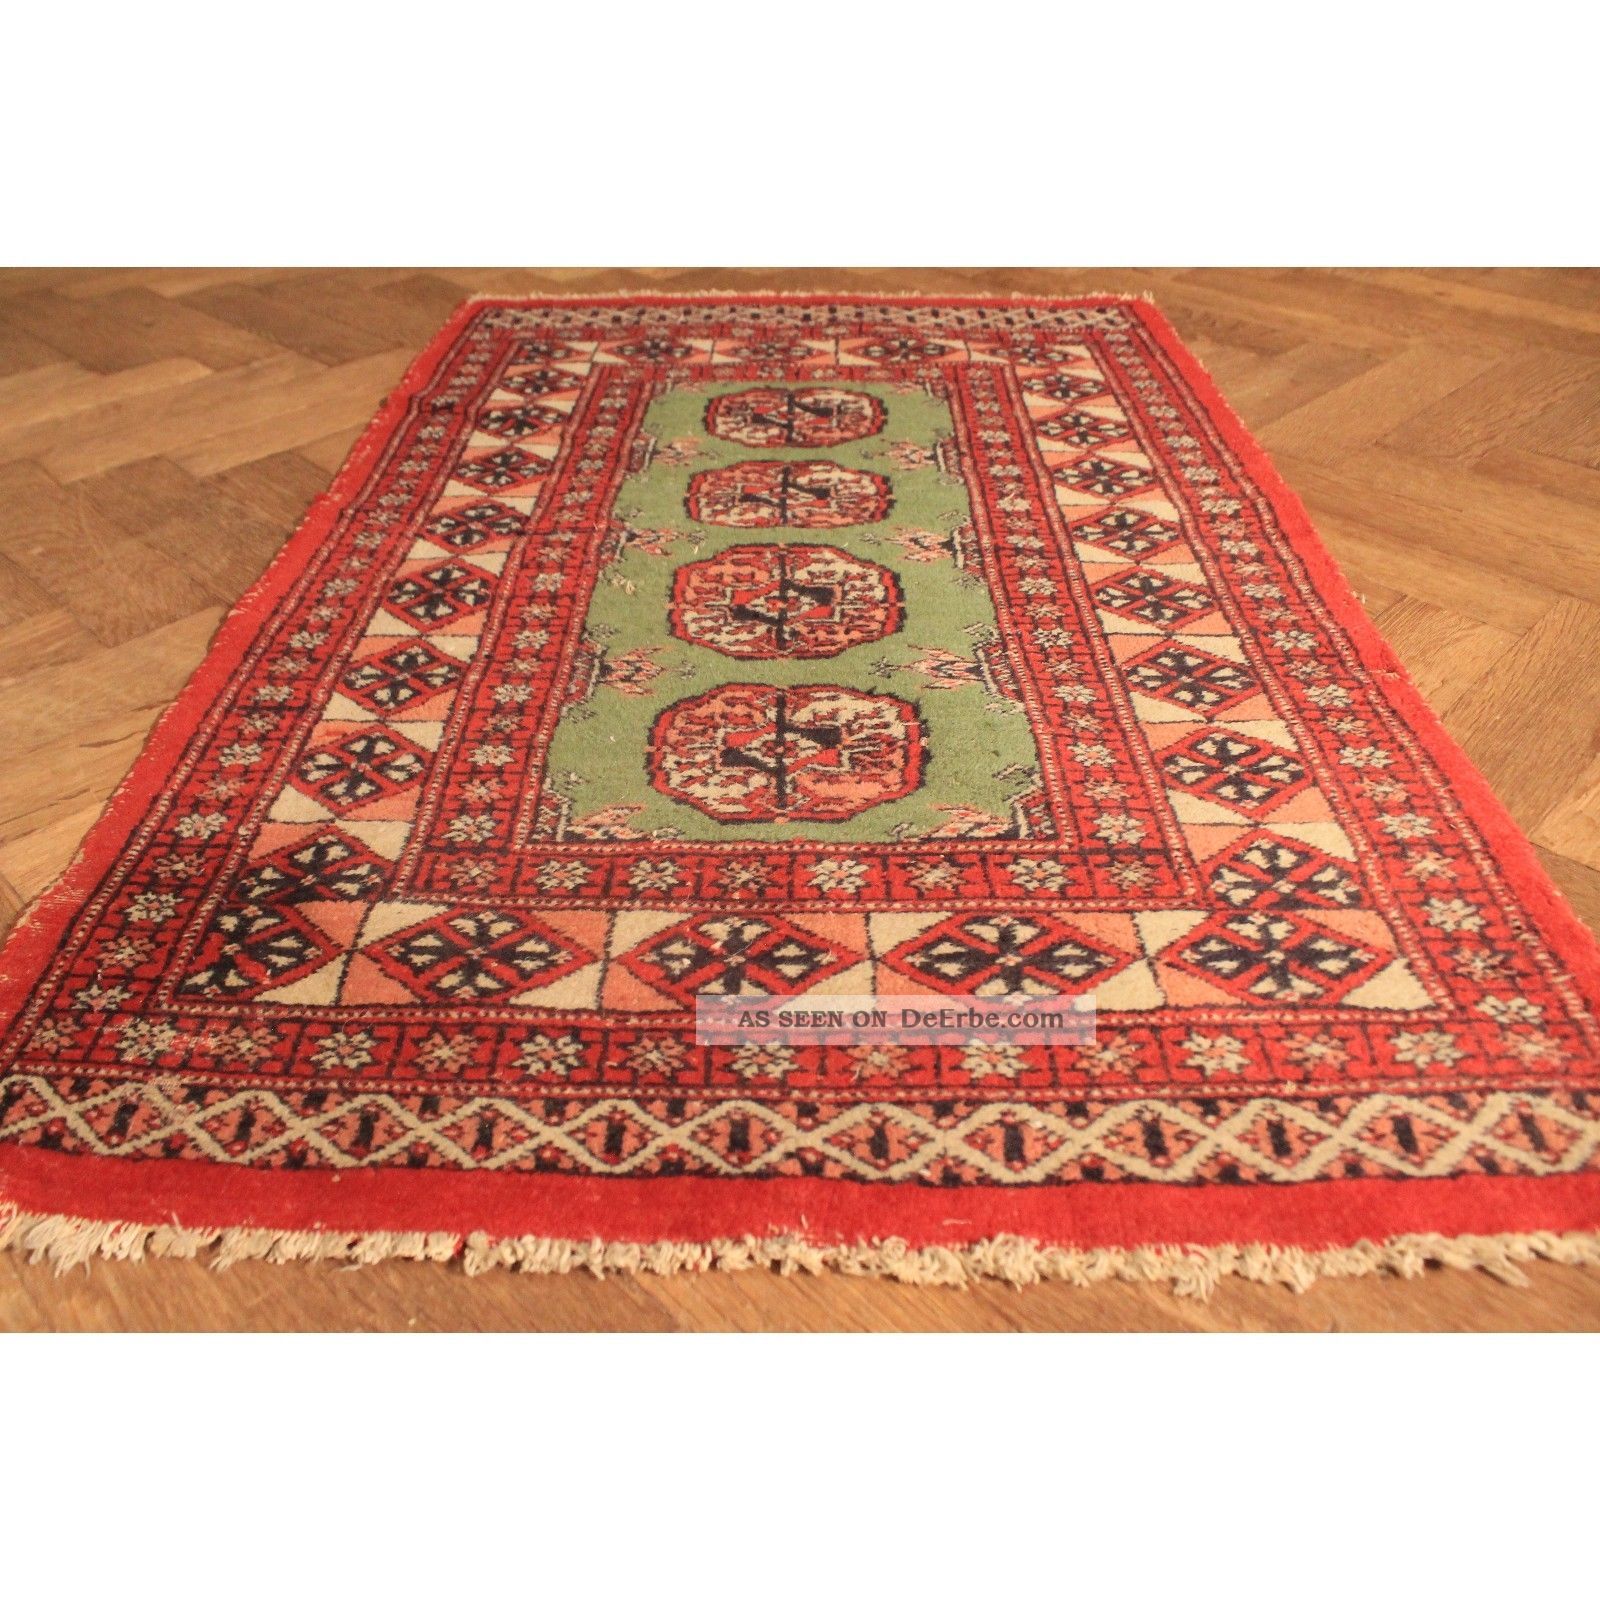 Alter Handgeknüpfter Orient Teppich Buchara Jomut Carpet Tappeto Tapis 125x80cm Teppiche & Flachgewebe Bild